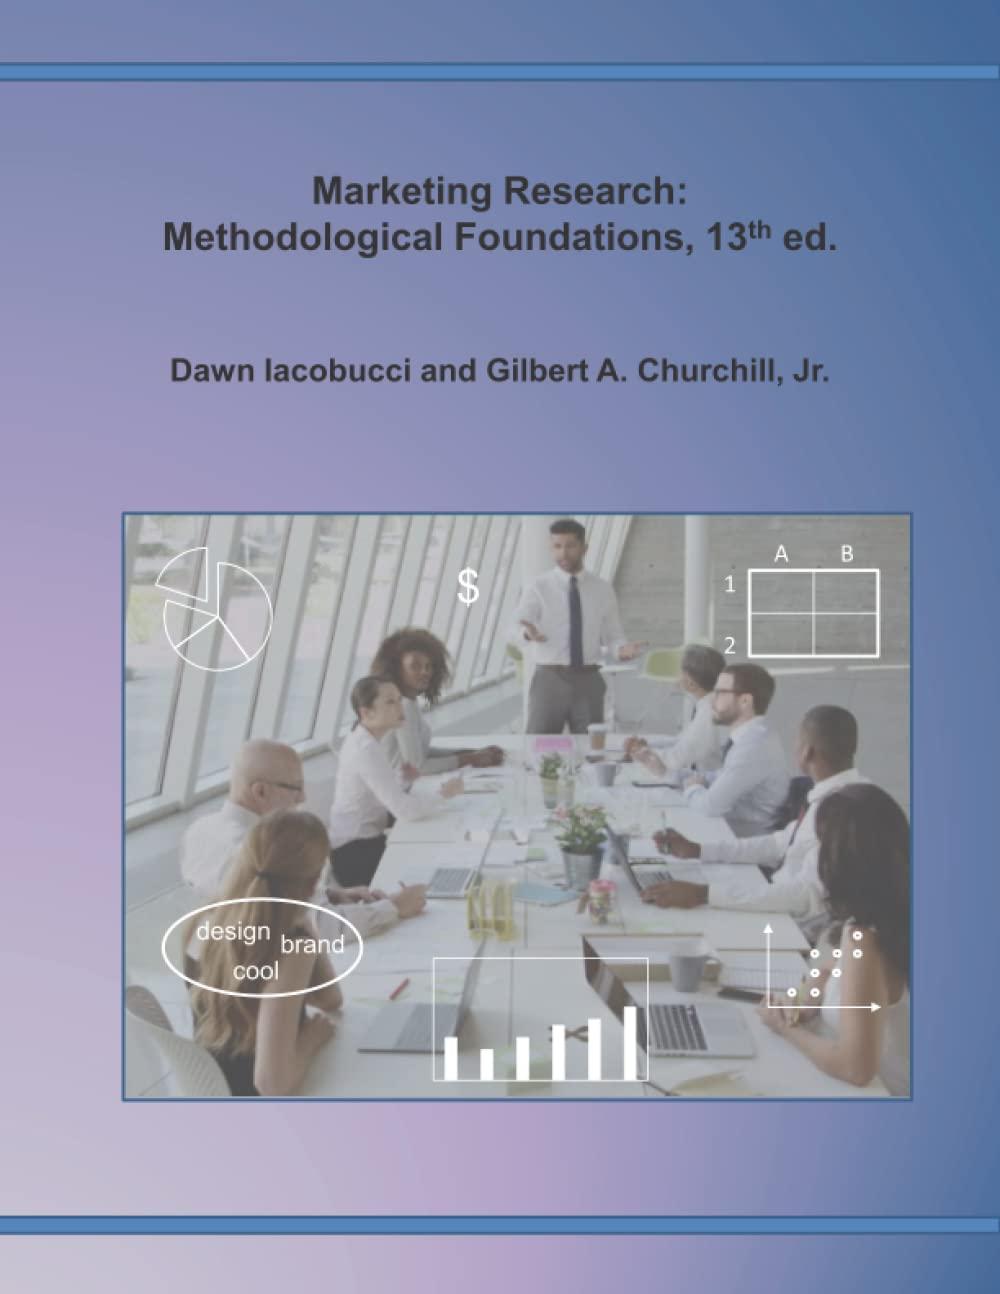 marketing research methodological foundations 13th edition dawn iacobucci b09rly9dqy, 979-8791801487